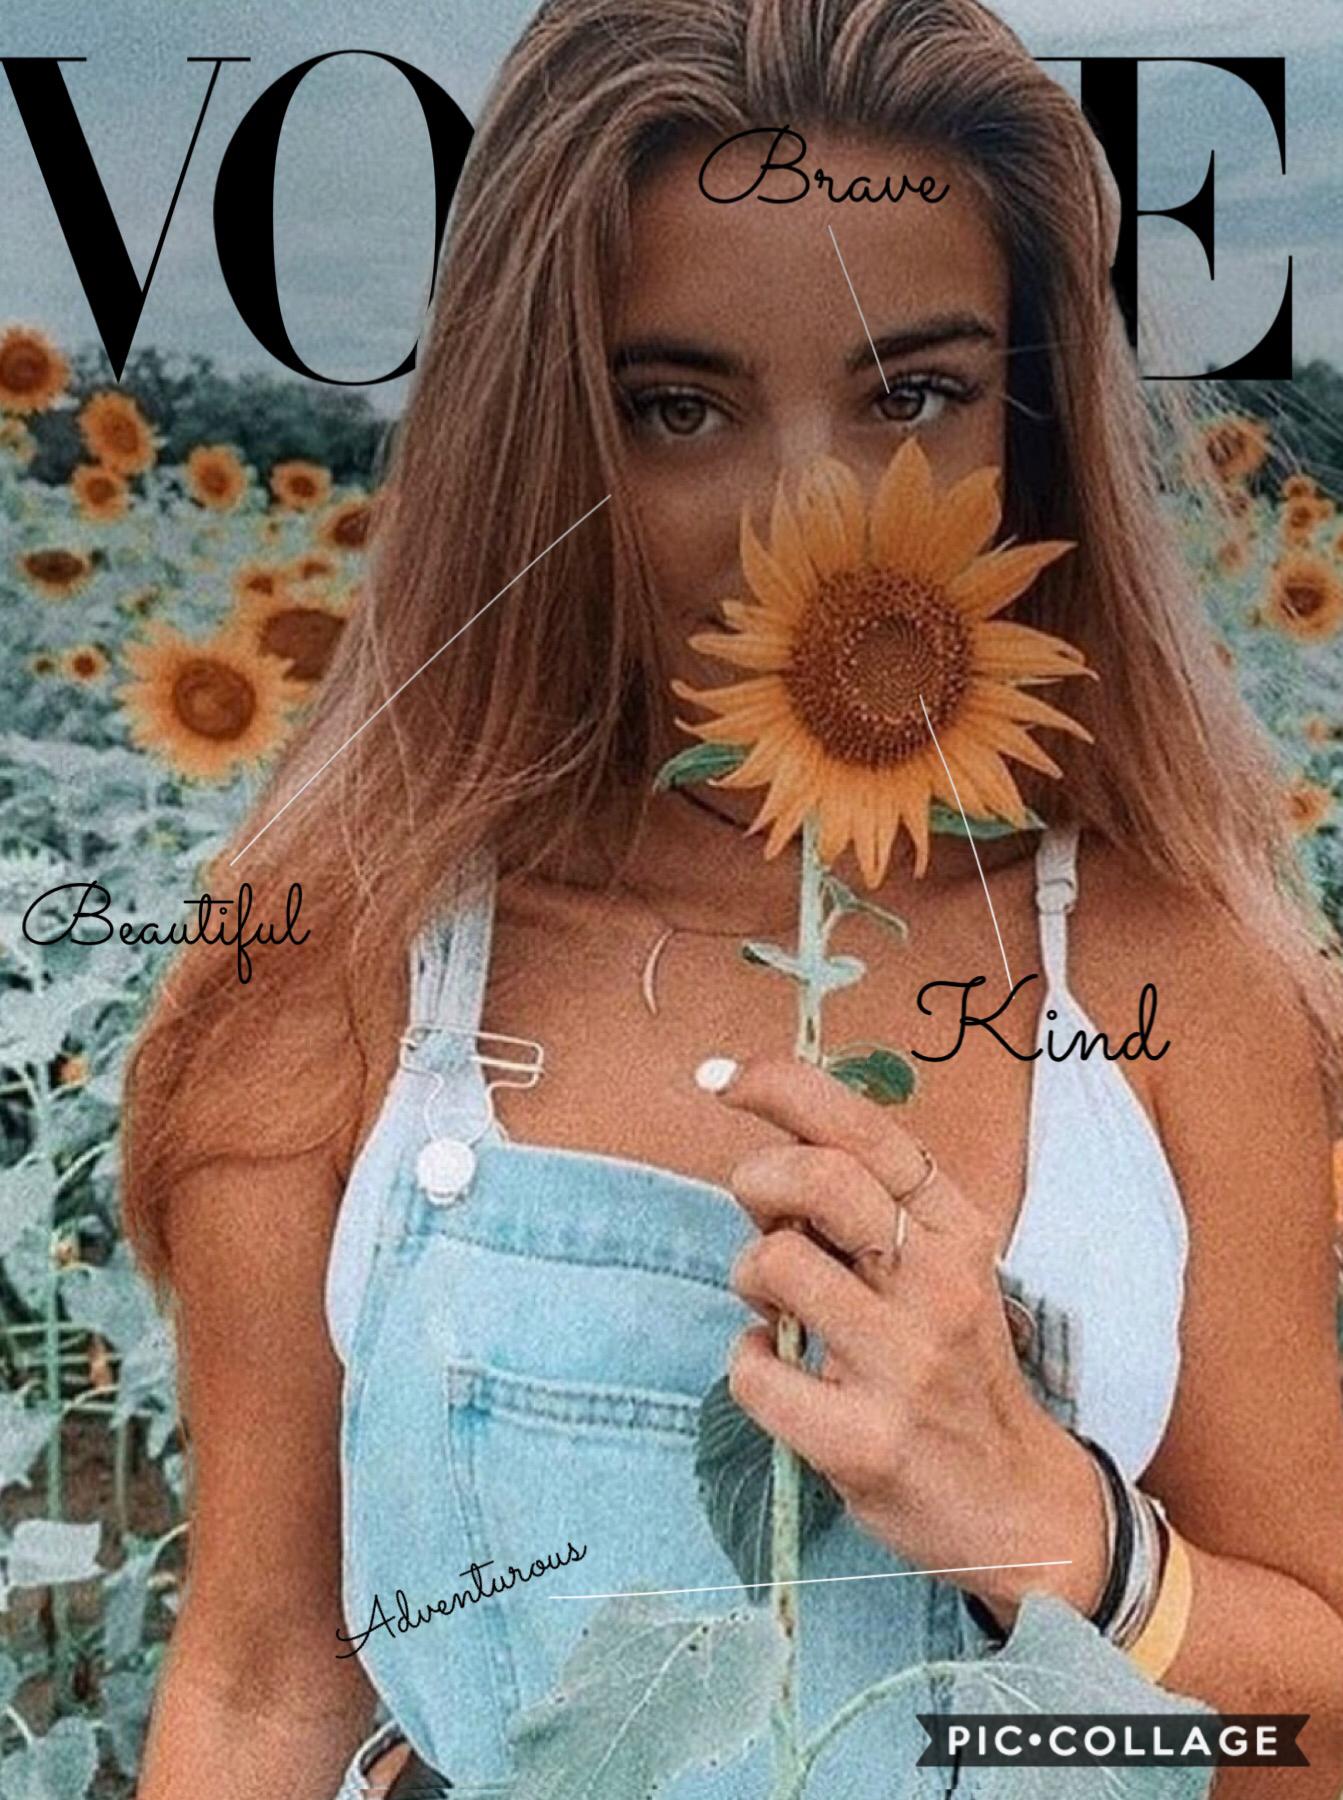 Vogue #2